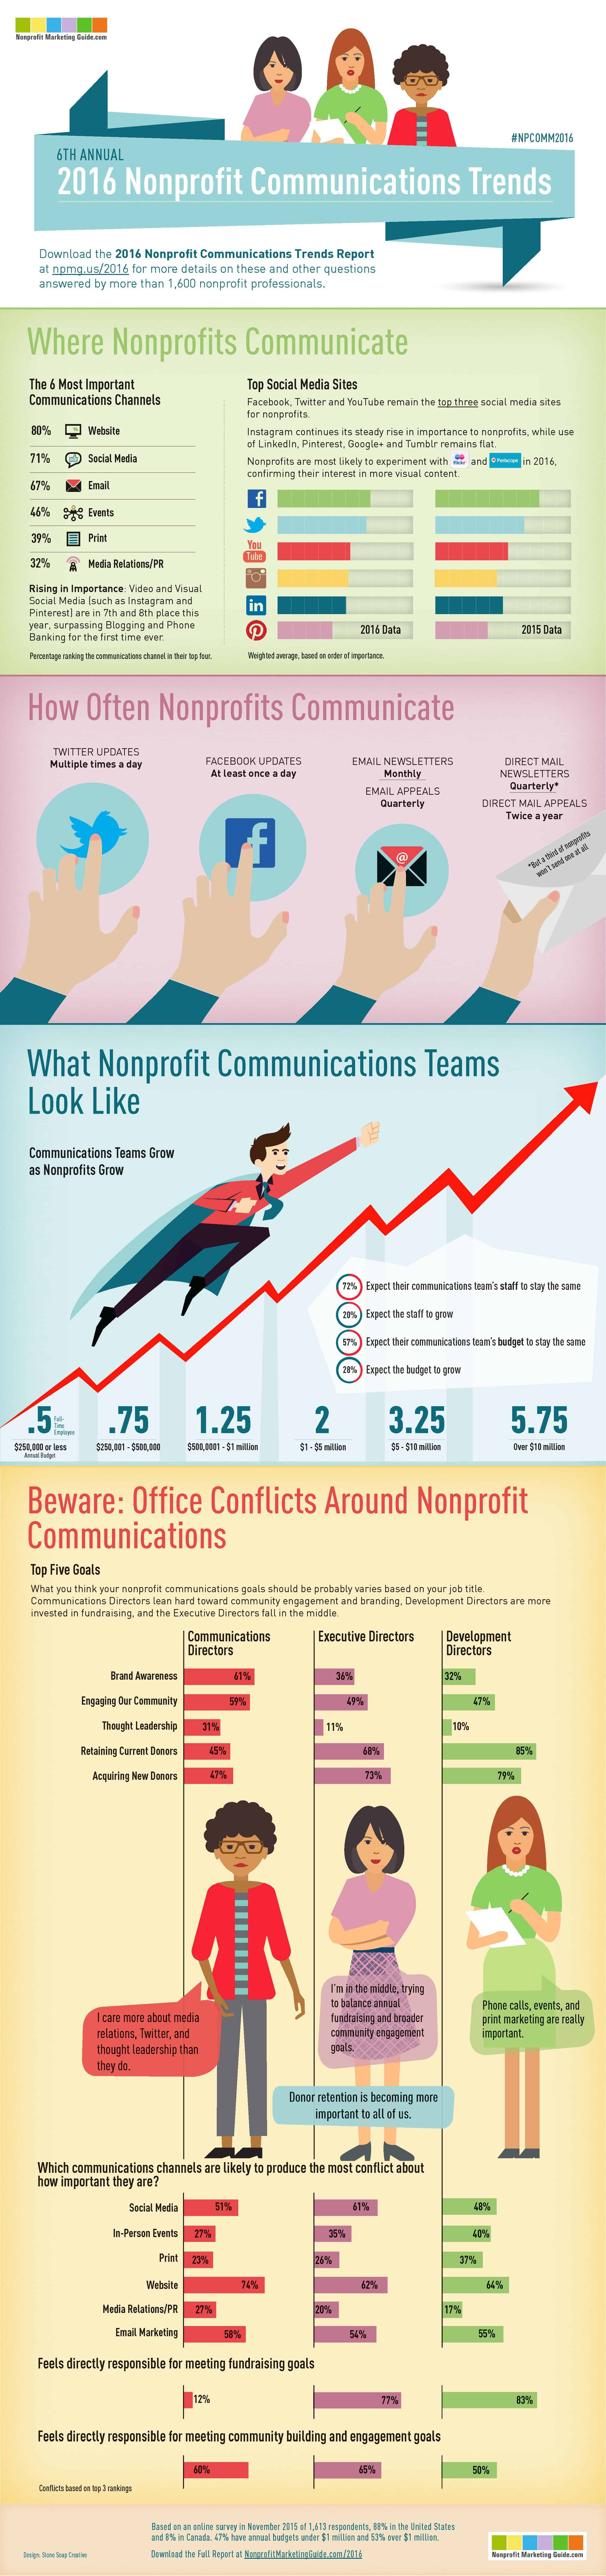 2016-Nonprofit-Communications-Trends-Infographic